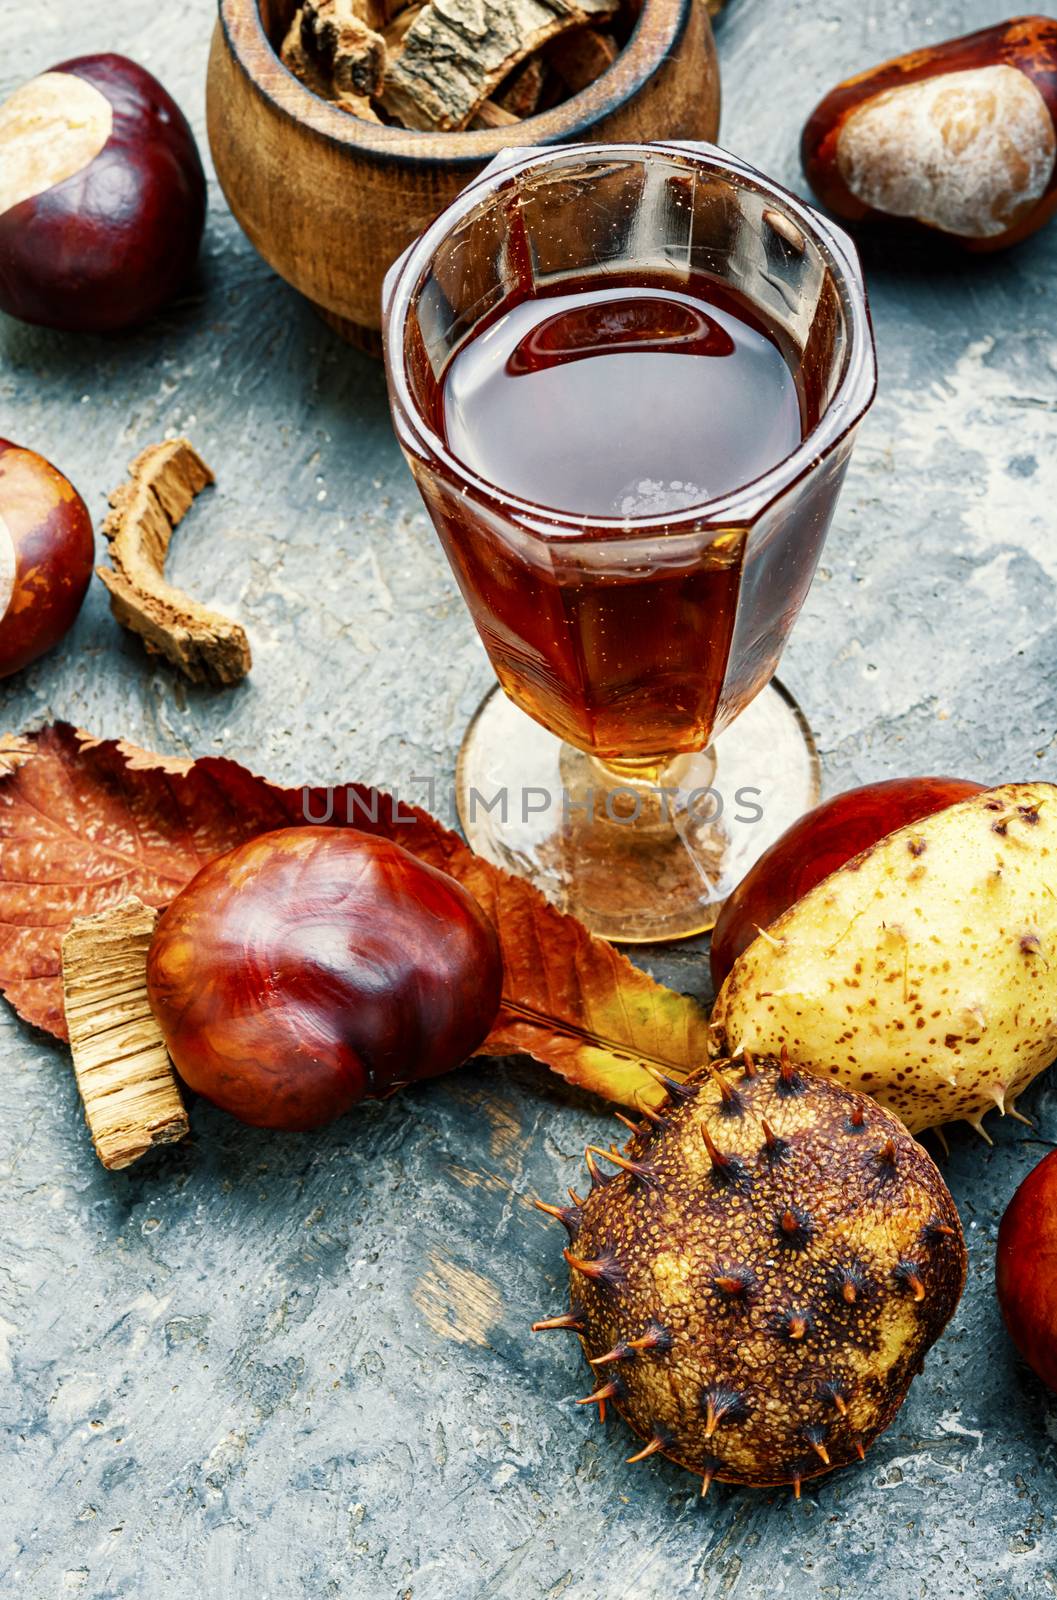 Chestnut in herbal medicine by LMykola